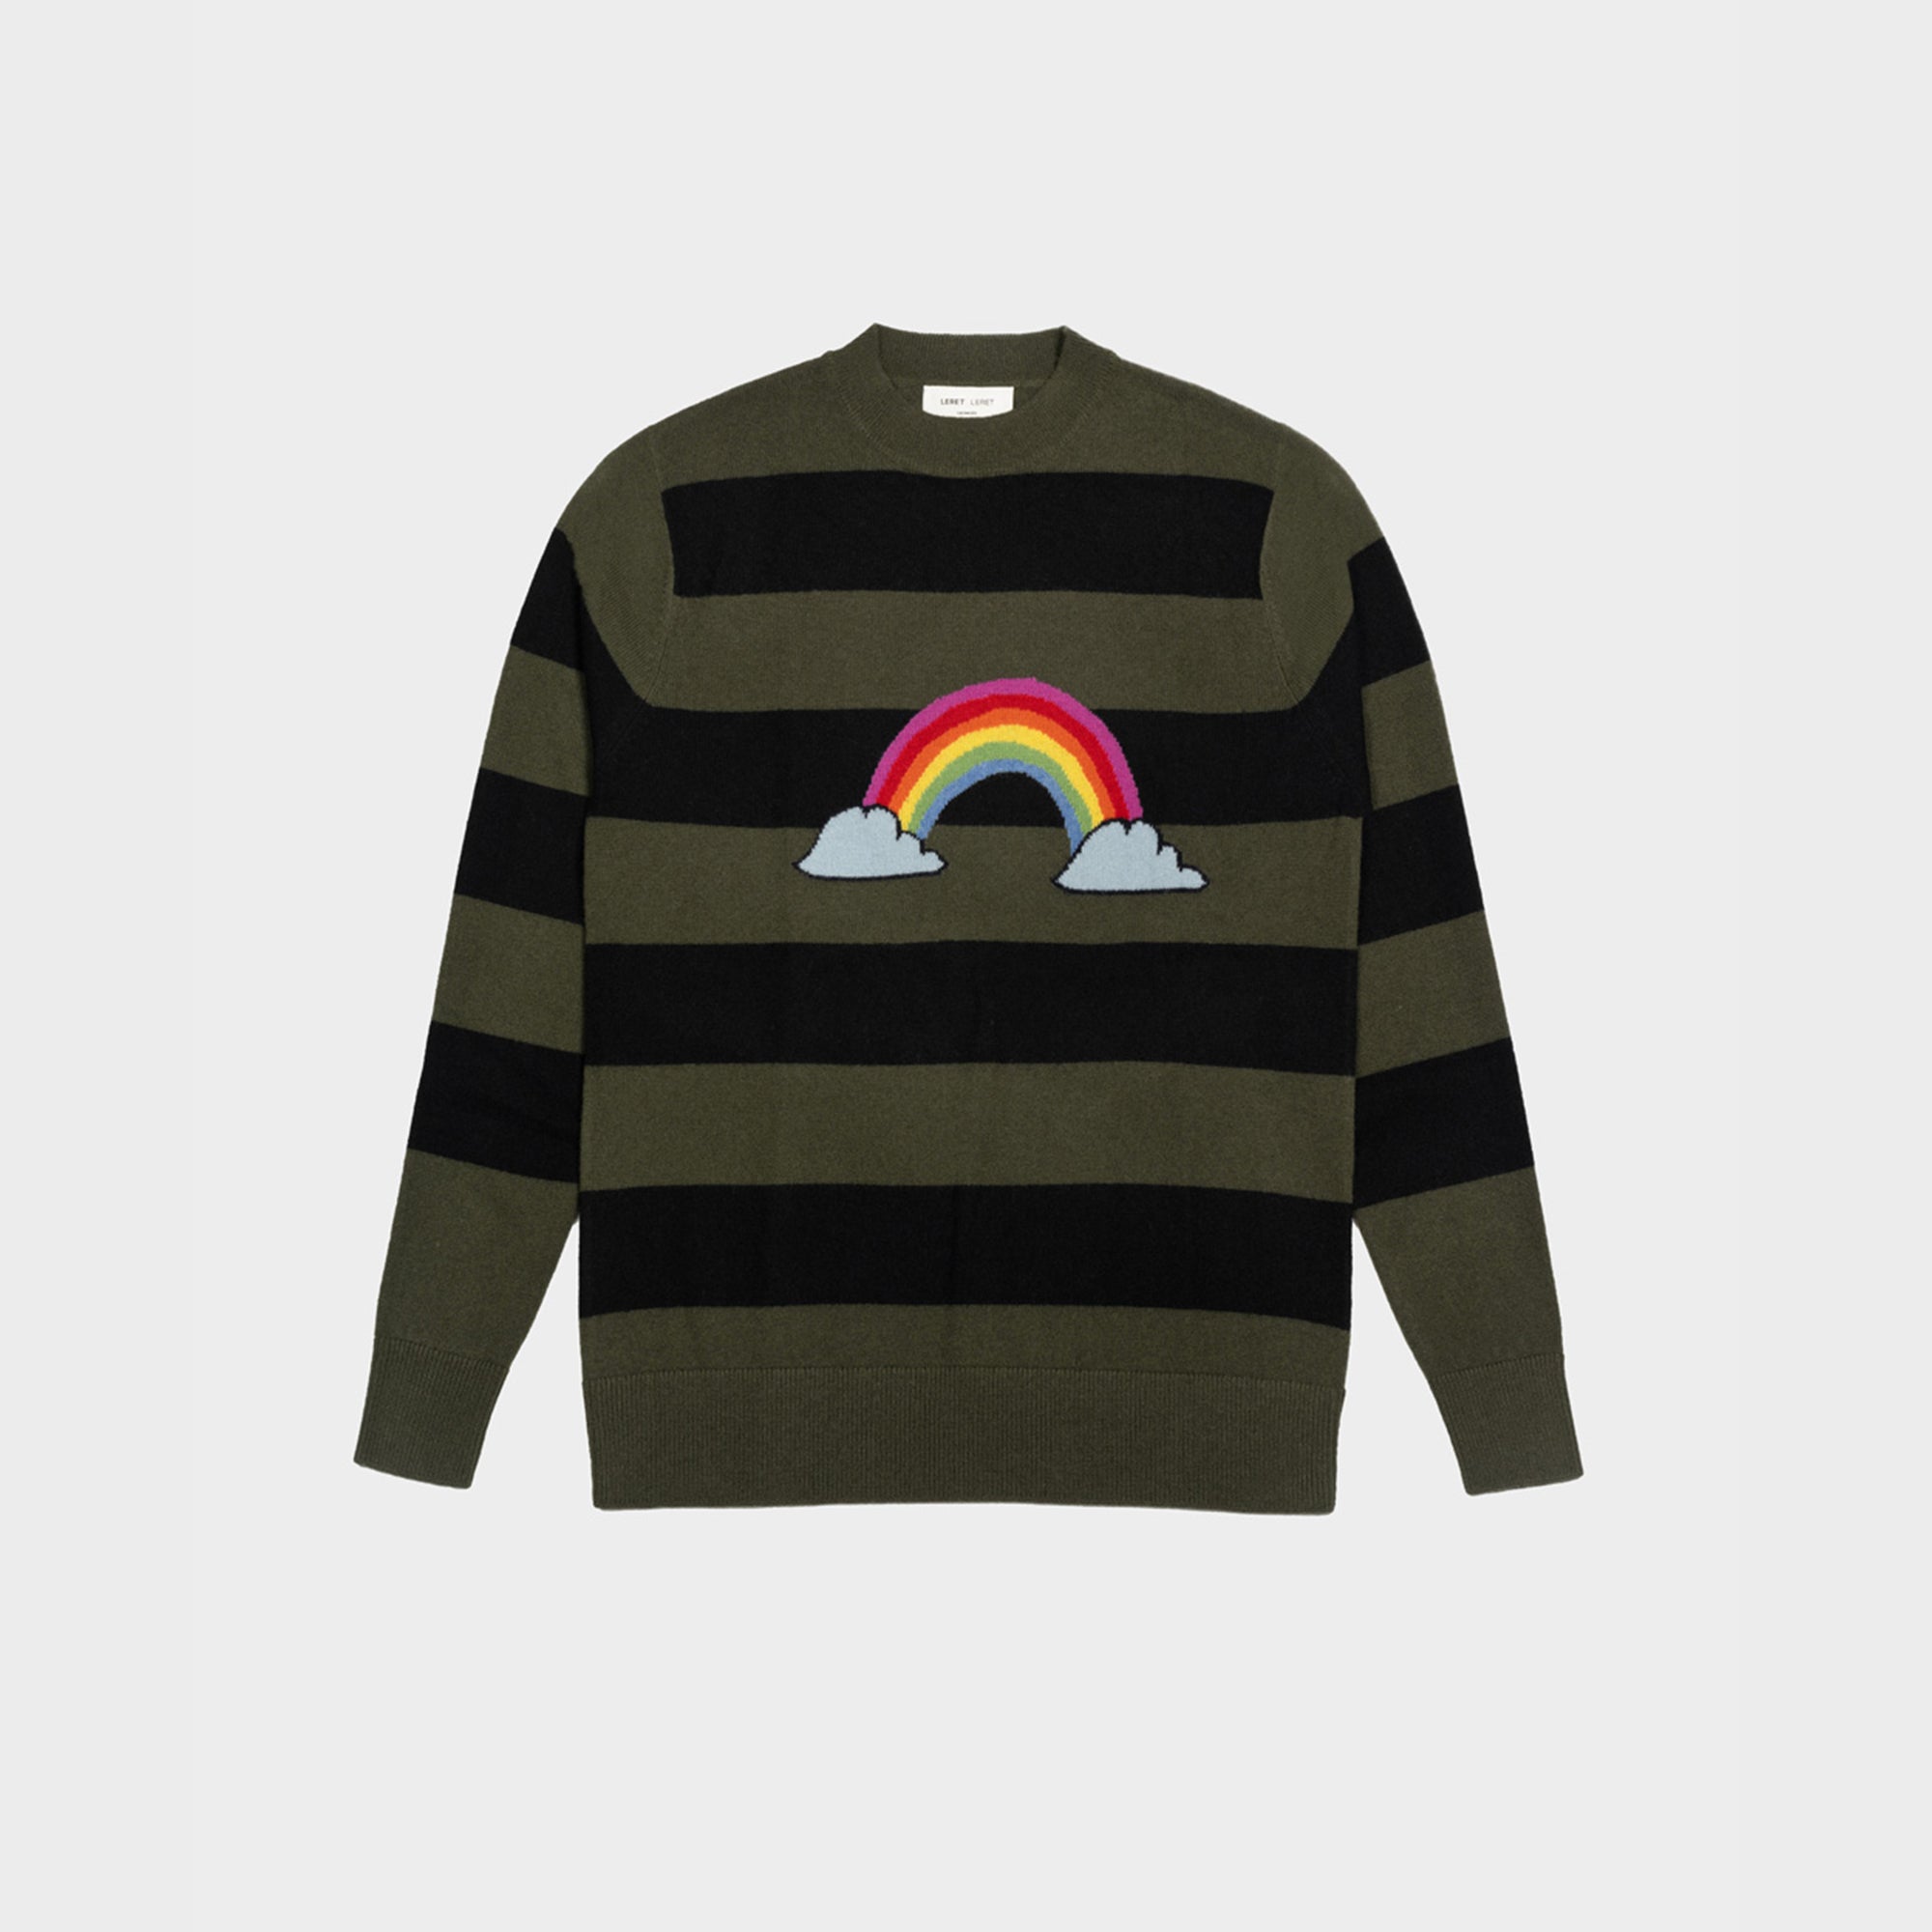 No. 51 Rainbow Sweater